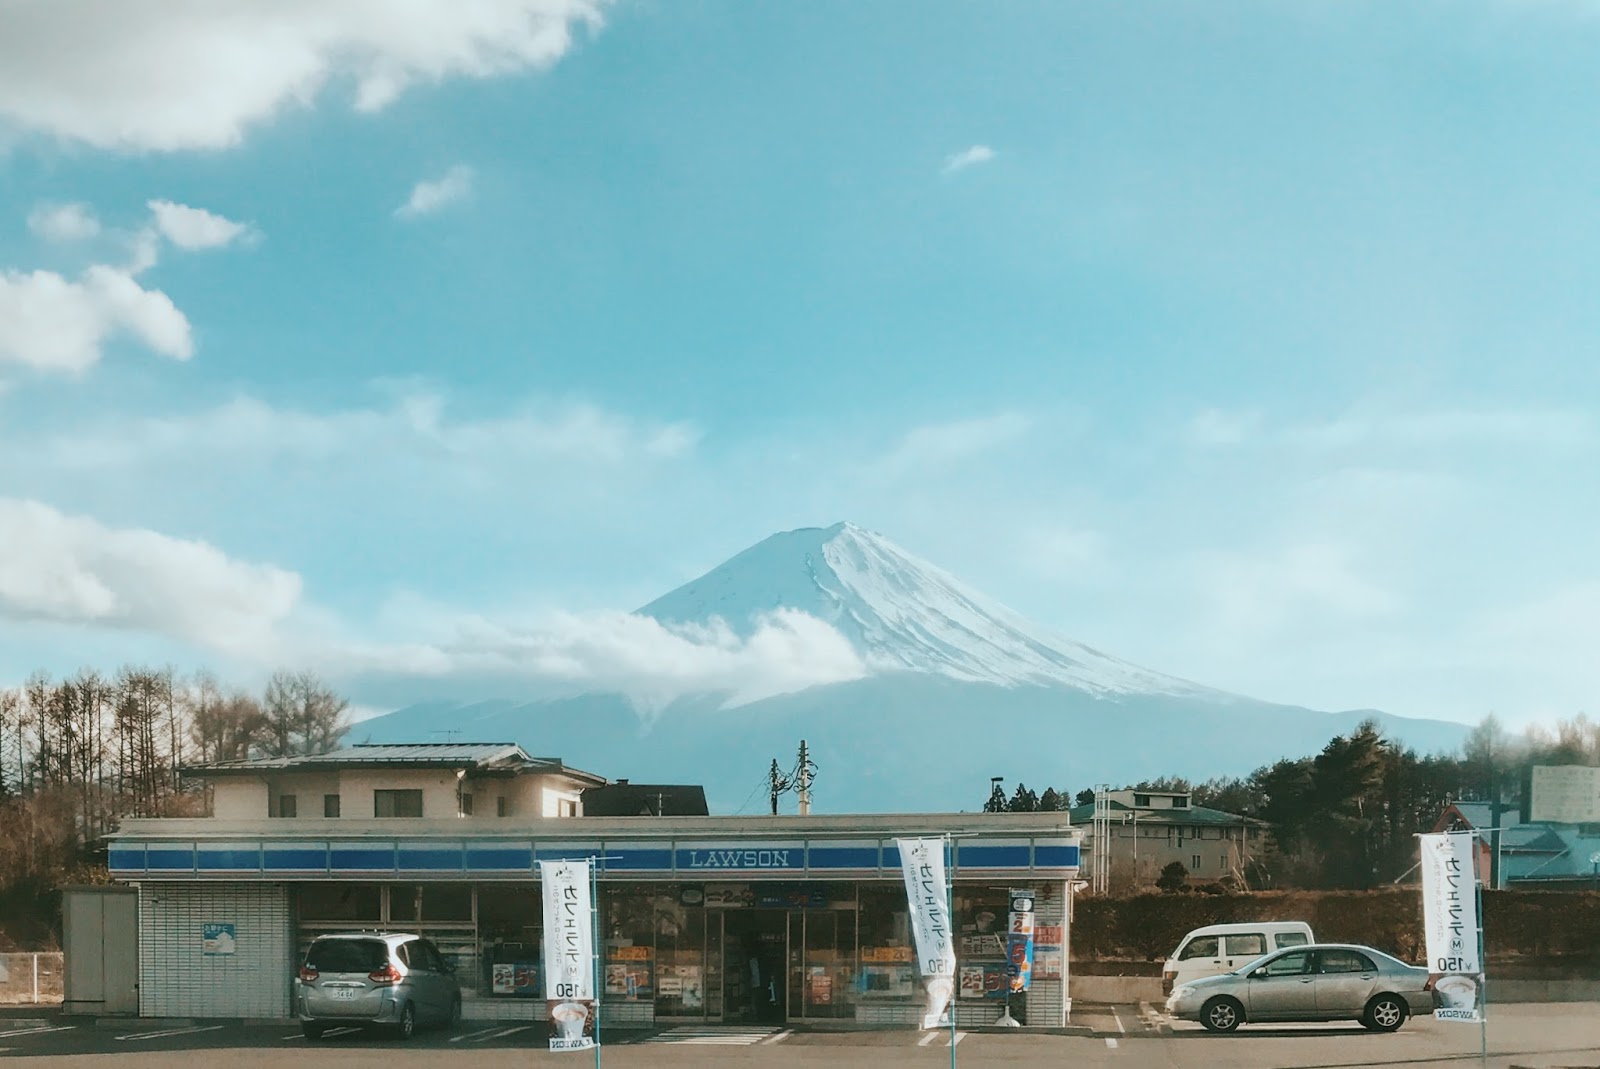 Cerita Febrian: Liat Gunung Fuji dari jarak pandang mata 